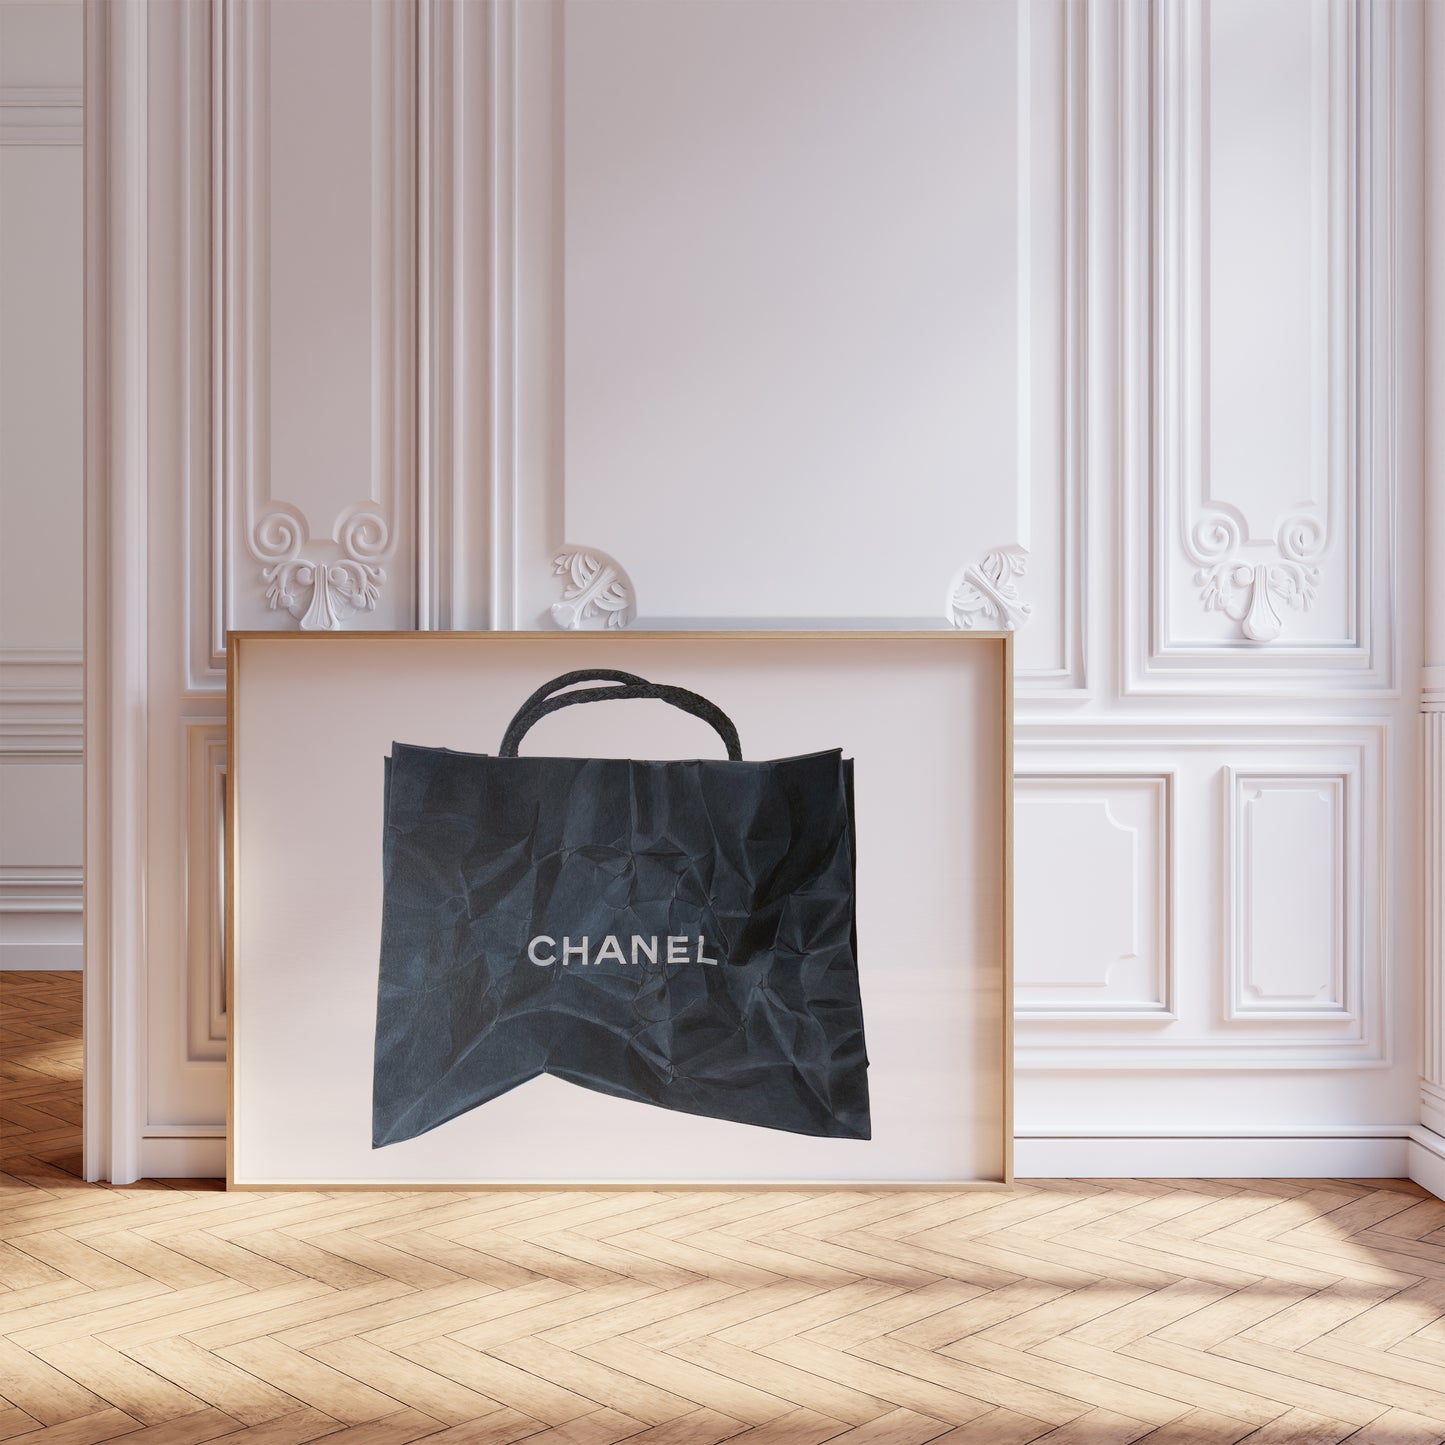 Fine Art Giclée Print "Chanel Crumble Bag"